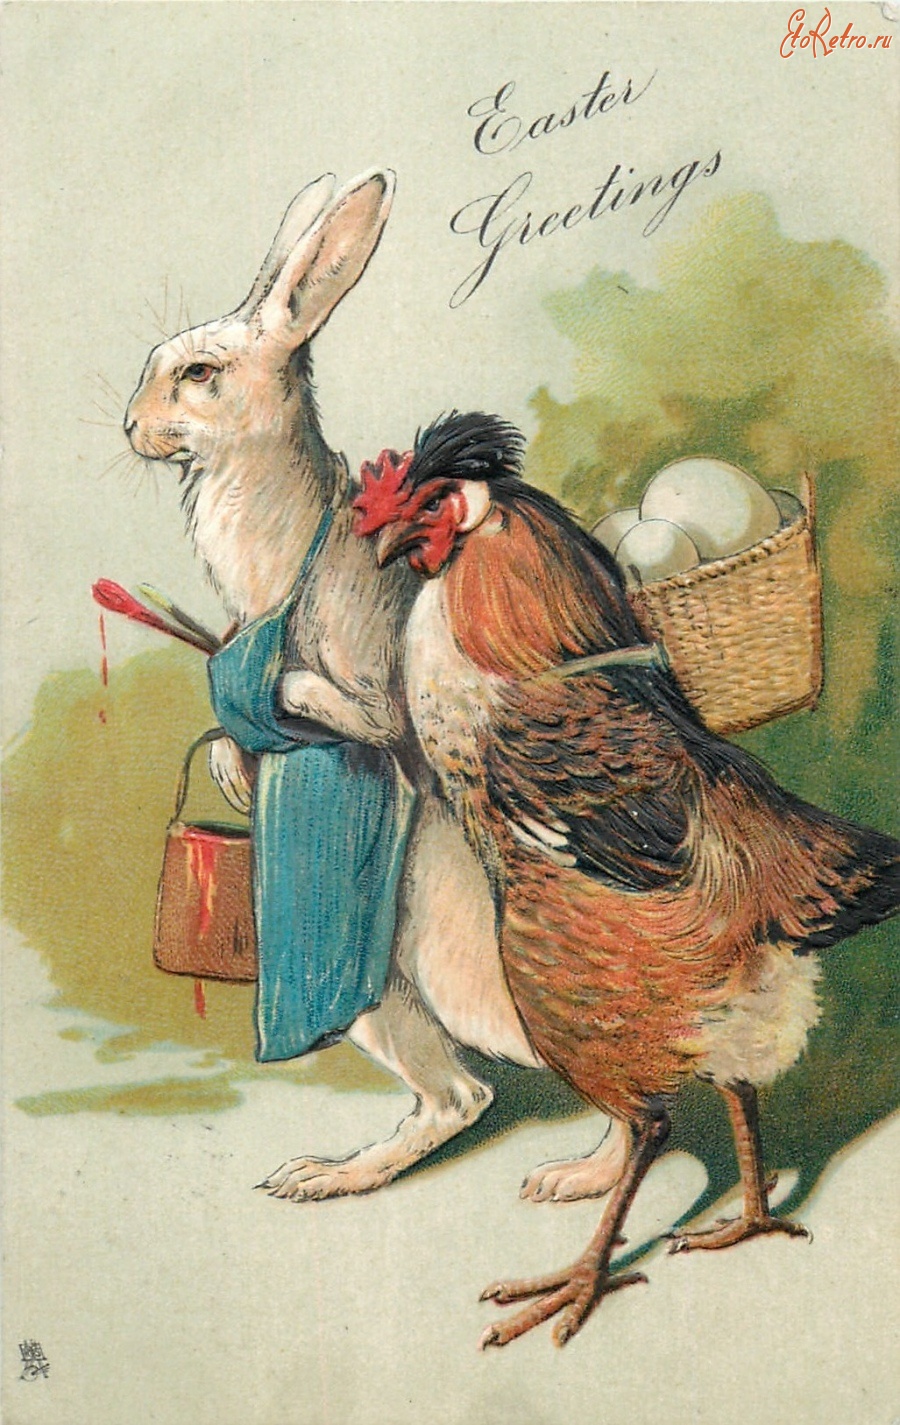 Ретро открытки - Пасхальные фантазии. Кролик, курица и корзина яиц